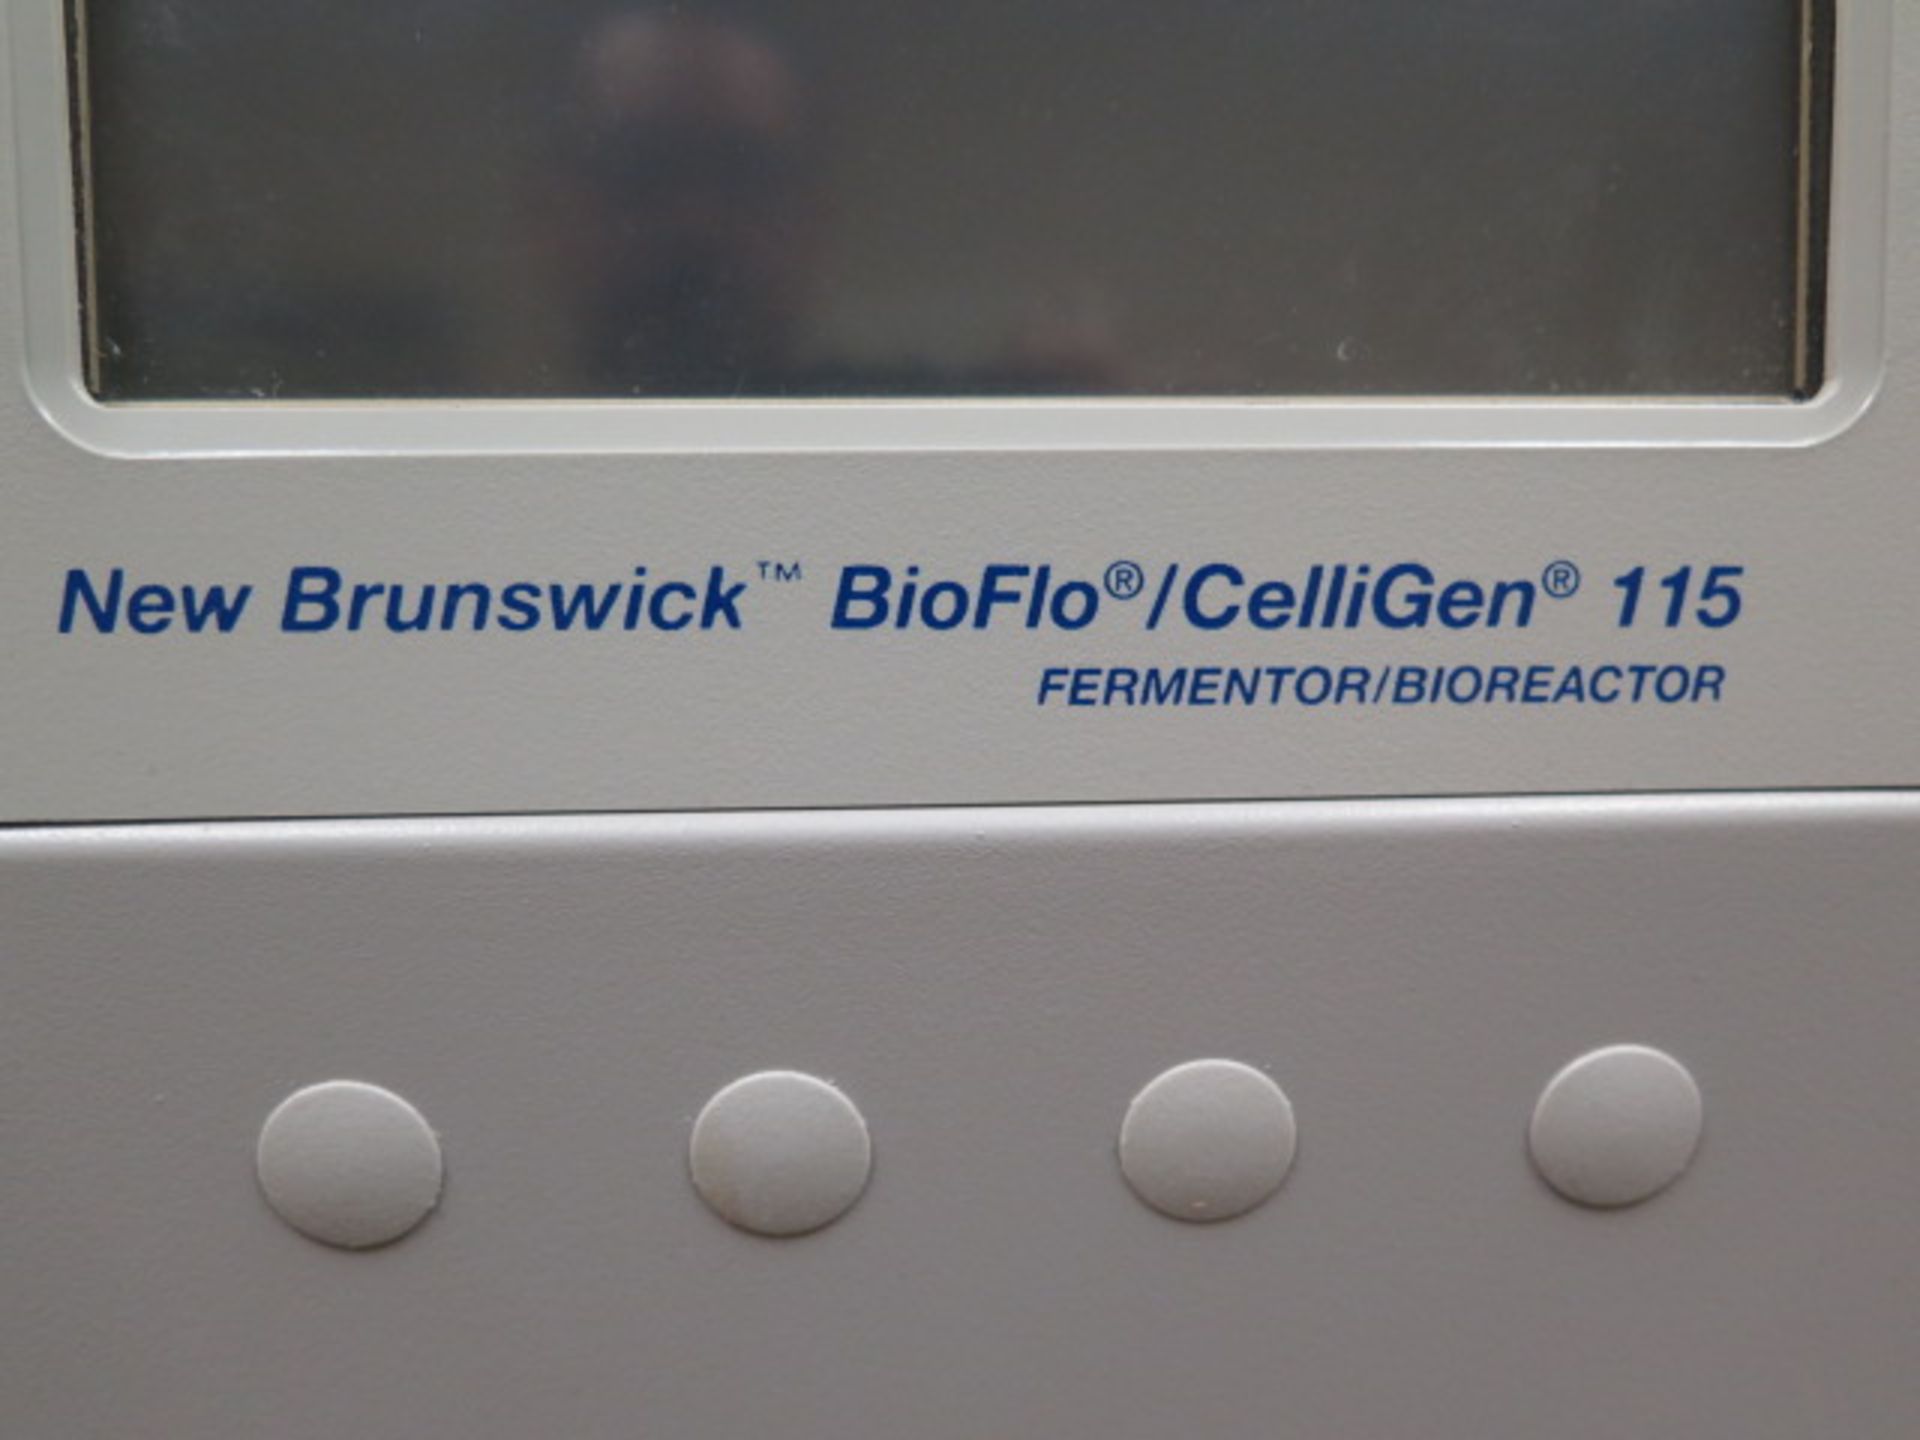 Eppendorf New Brunswick BioFlo/CelliGen 115 Fermenter Bioreactor (SOLD AS-IS - NO WARRANTY) - Image 11 of 11